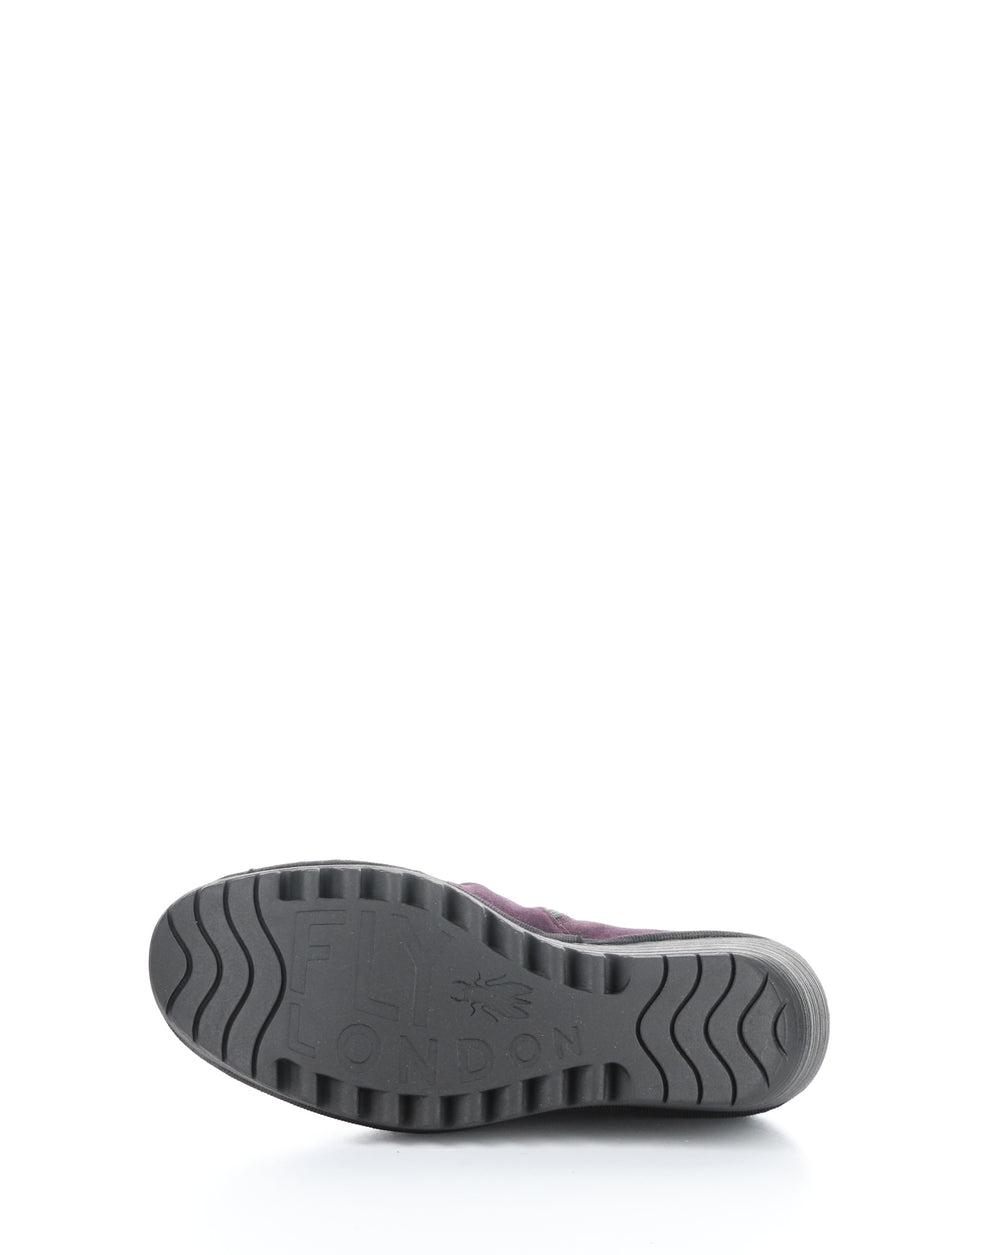 YOPA461FLY 002 PURPLE/BLACK Round Toe Boots